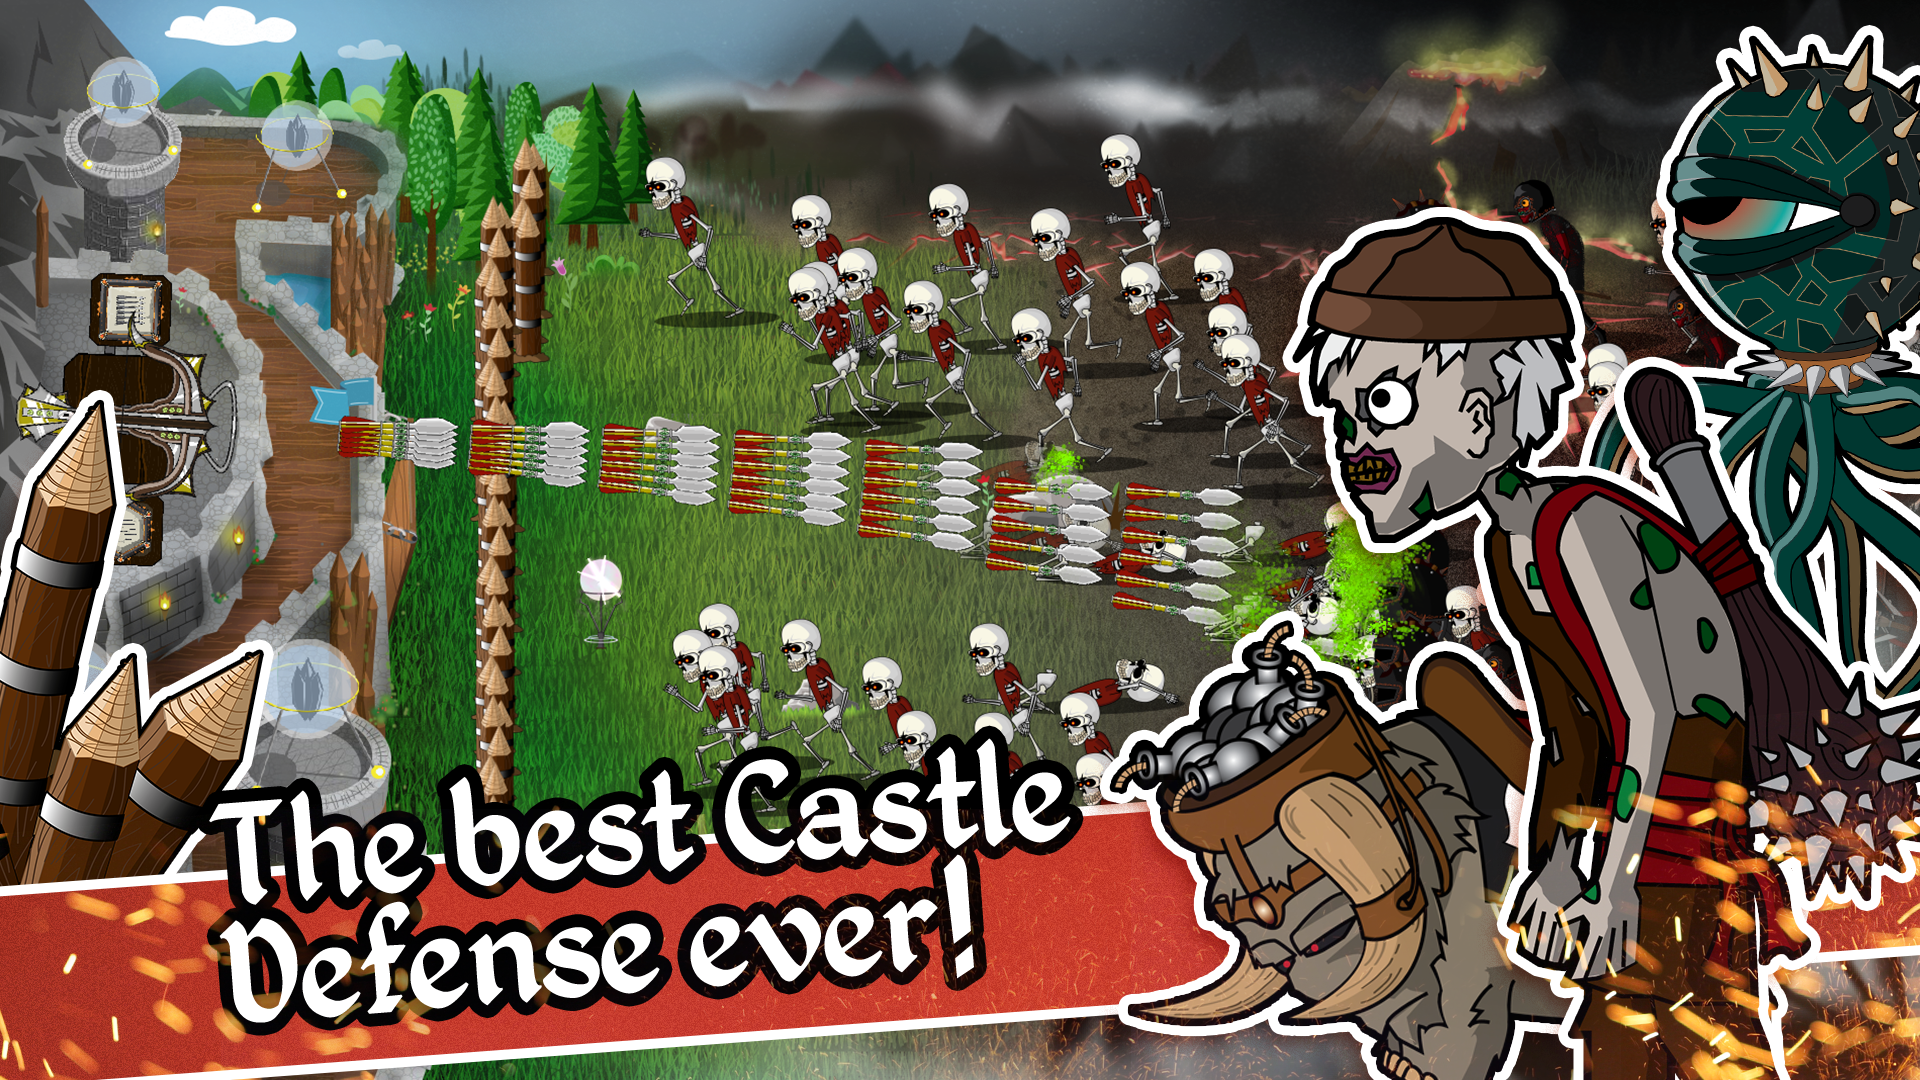 castle defense upgraded